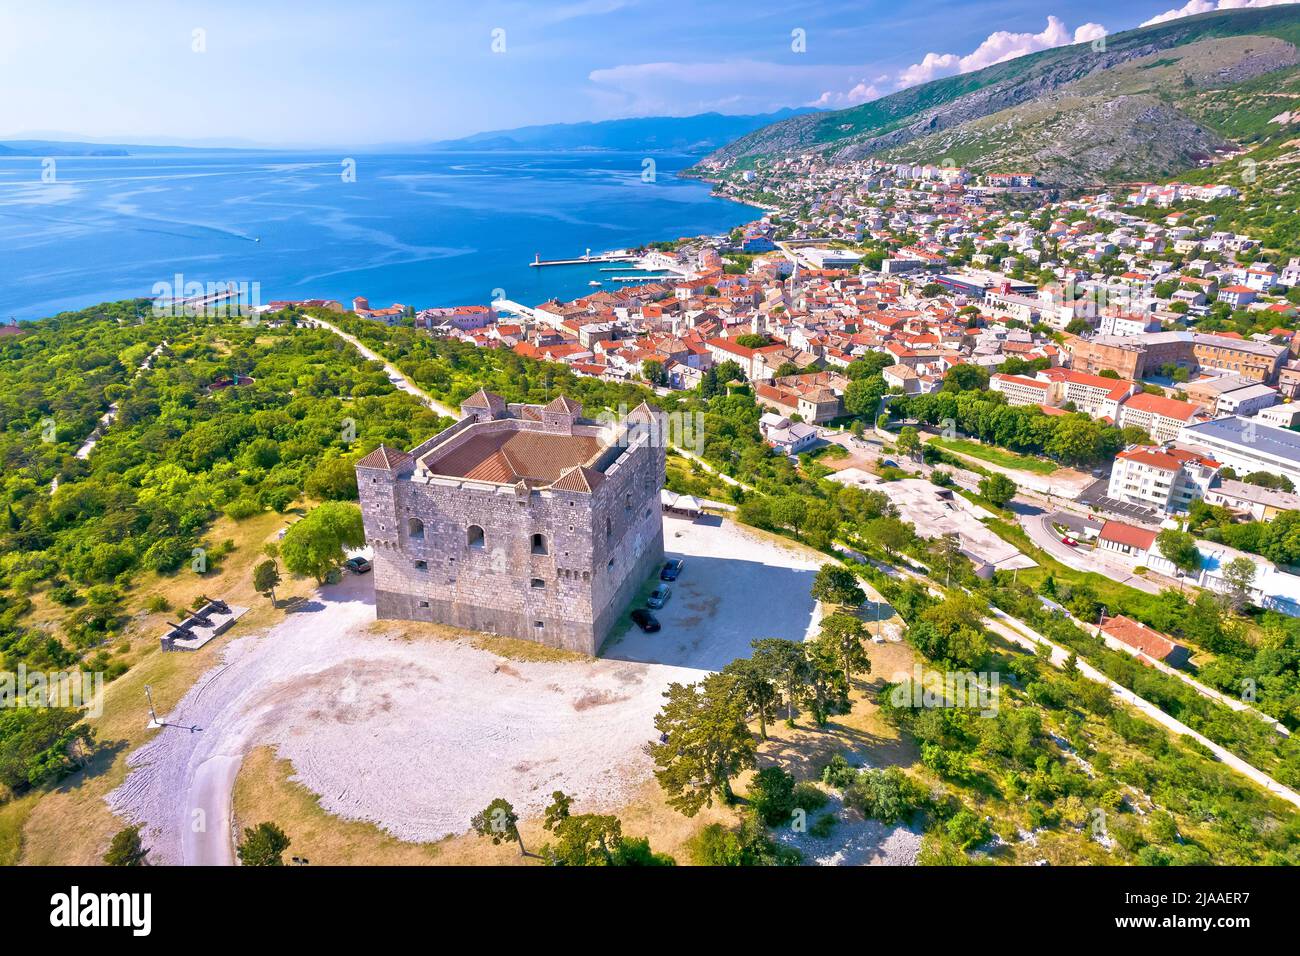 Town of Senj and Nehaj fortress aerial view, Adriatic sea, Primorje region of Croatia Stock Photo